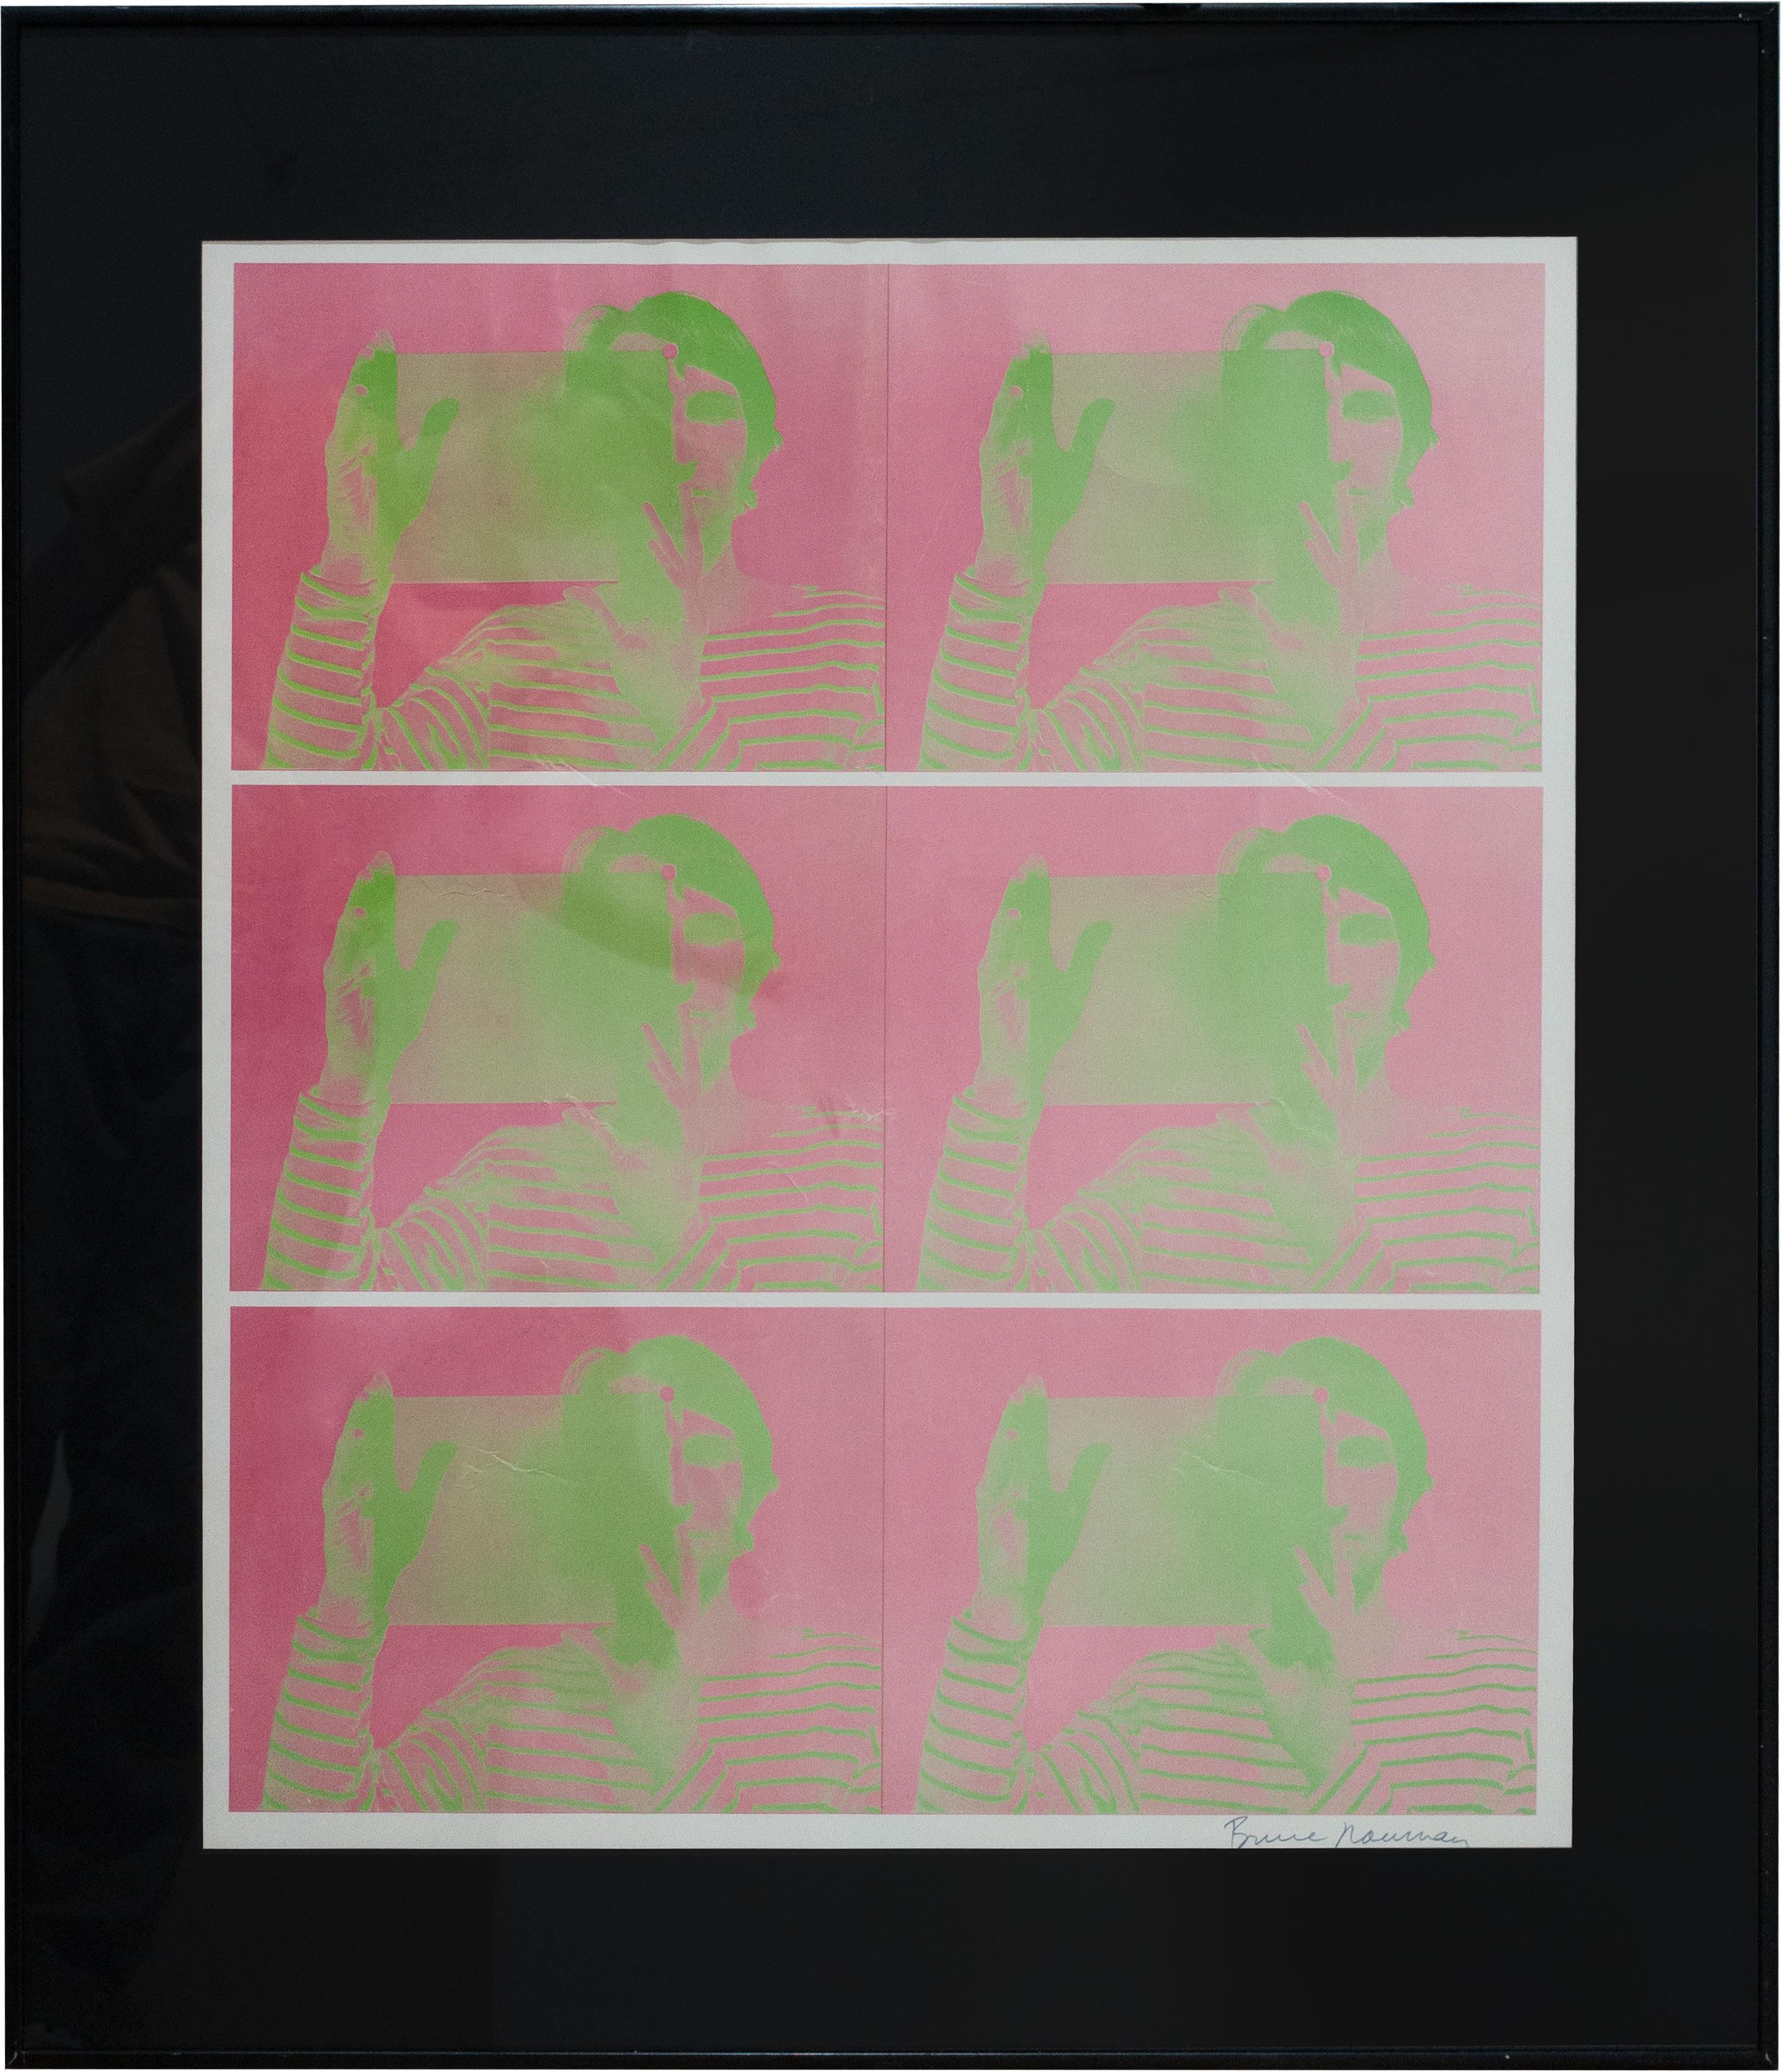  Sequence, 1969, Litografia, Leo Castelli gallery, Body Art - Pop Art Print by Bruce Nauman